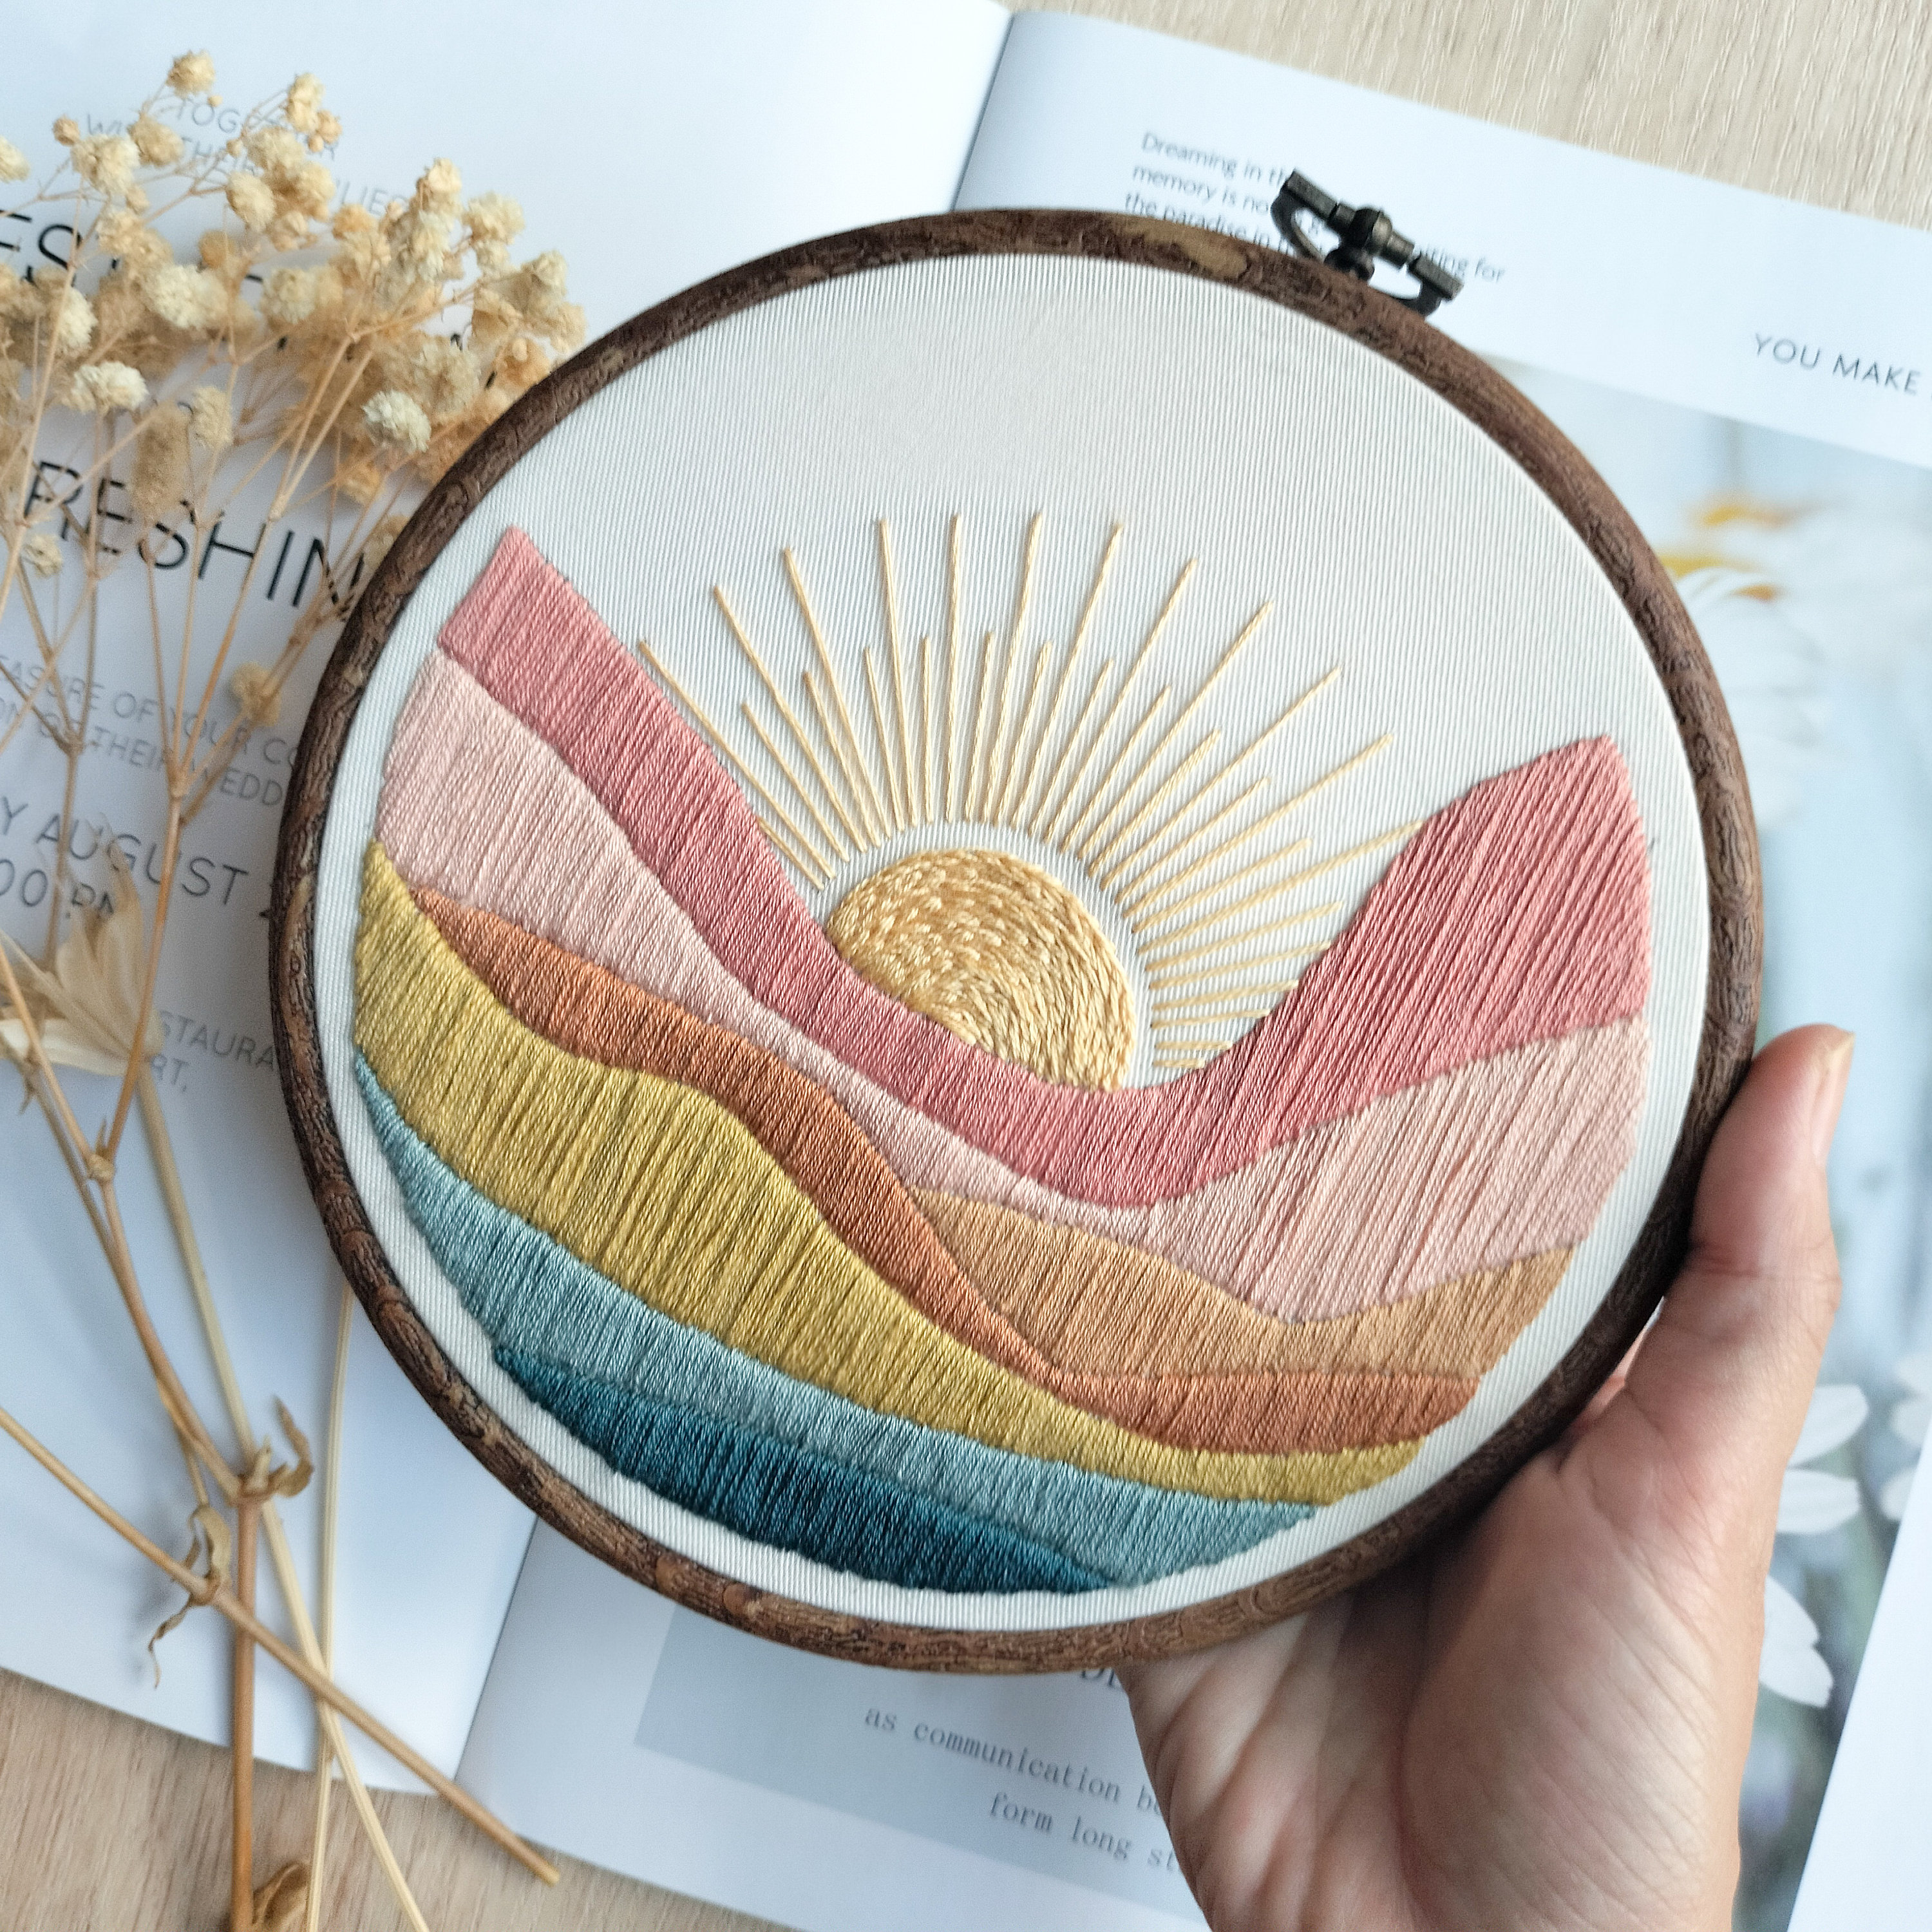 Embroidery Hoop Canvas Painting - thesteelbeam